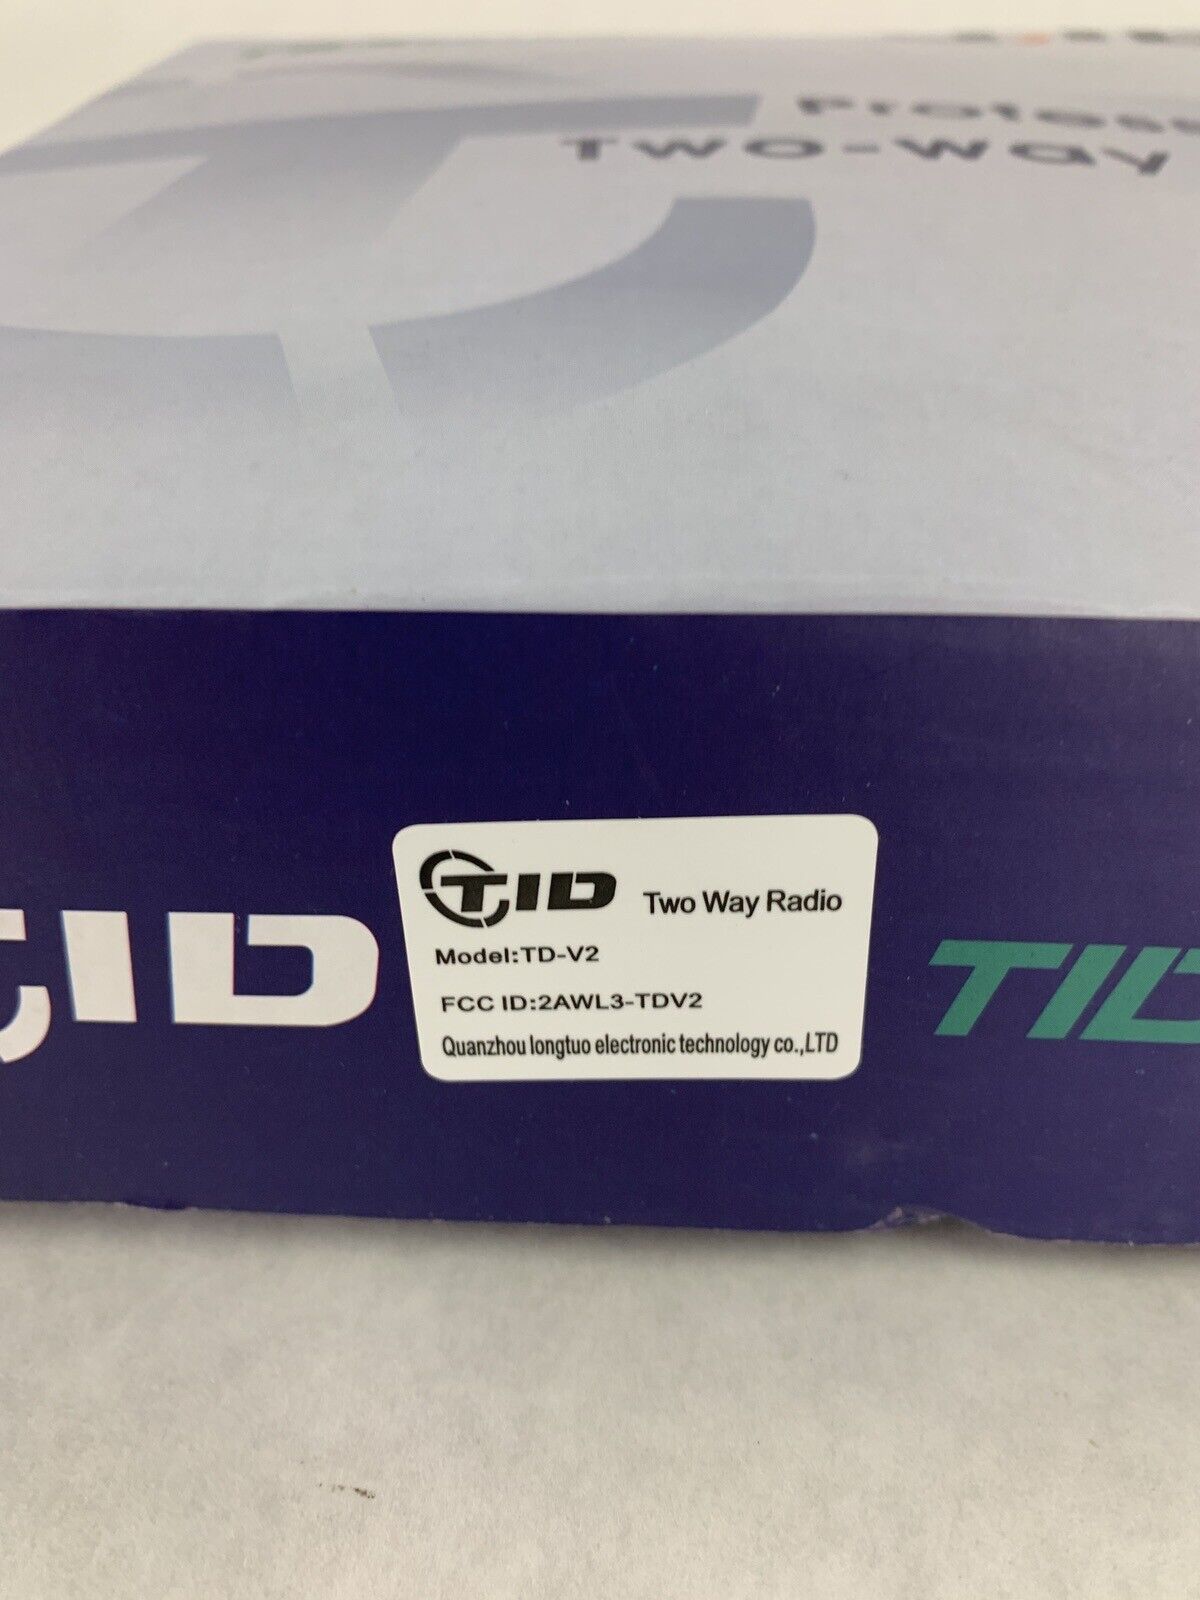 New Box Opened Tidradio 2-way Radios Model TD-V2 VHF/UHF FM Transceiver